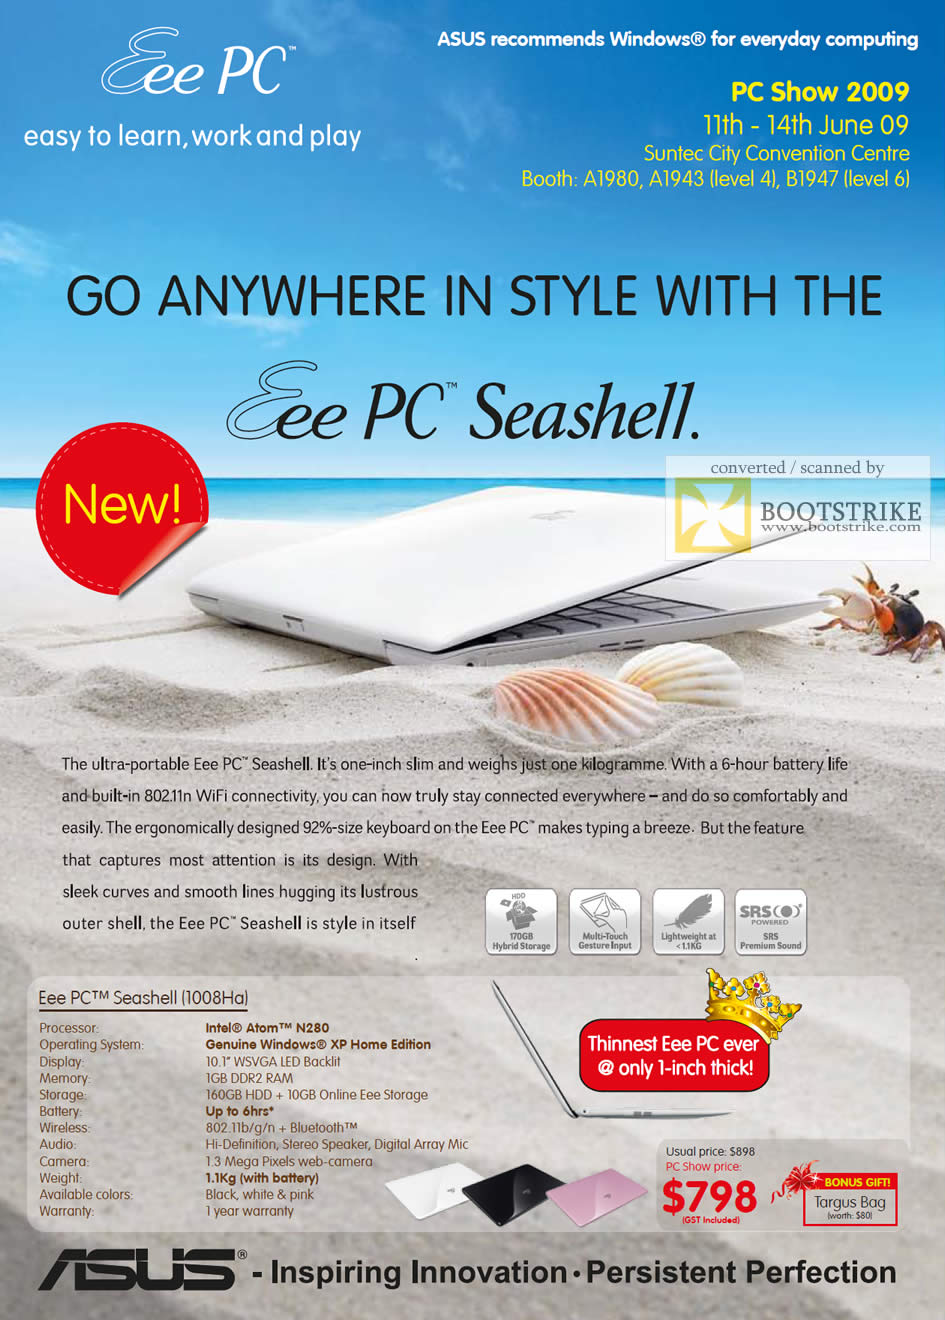 PC Show 2009 price list image brochure of Asus Eee PC Seashell 1008Ha